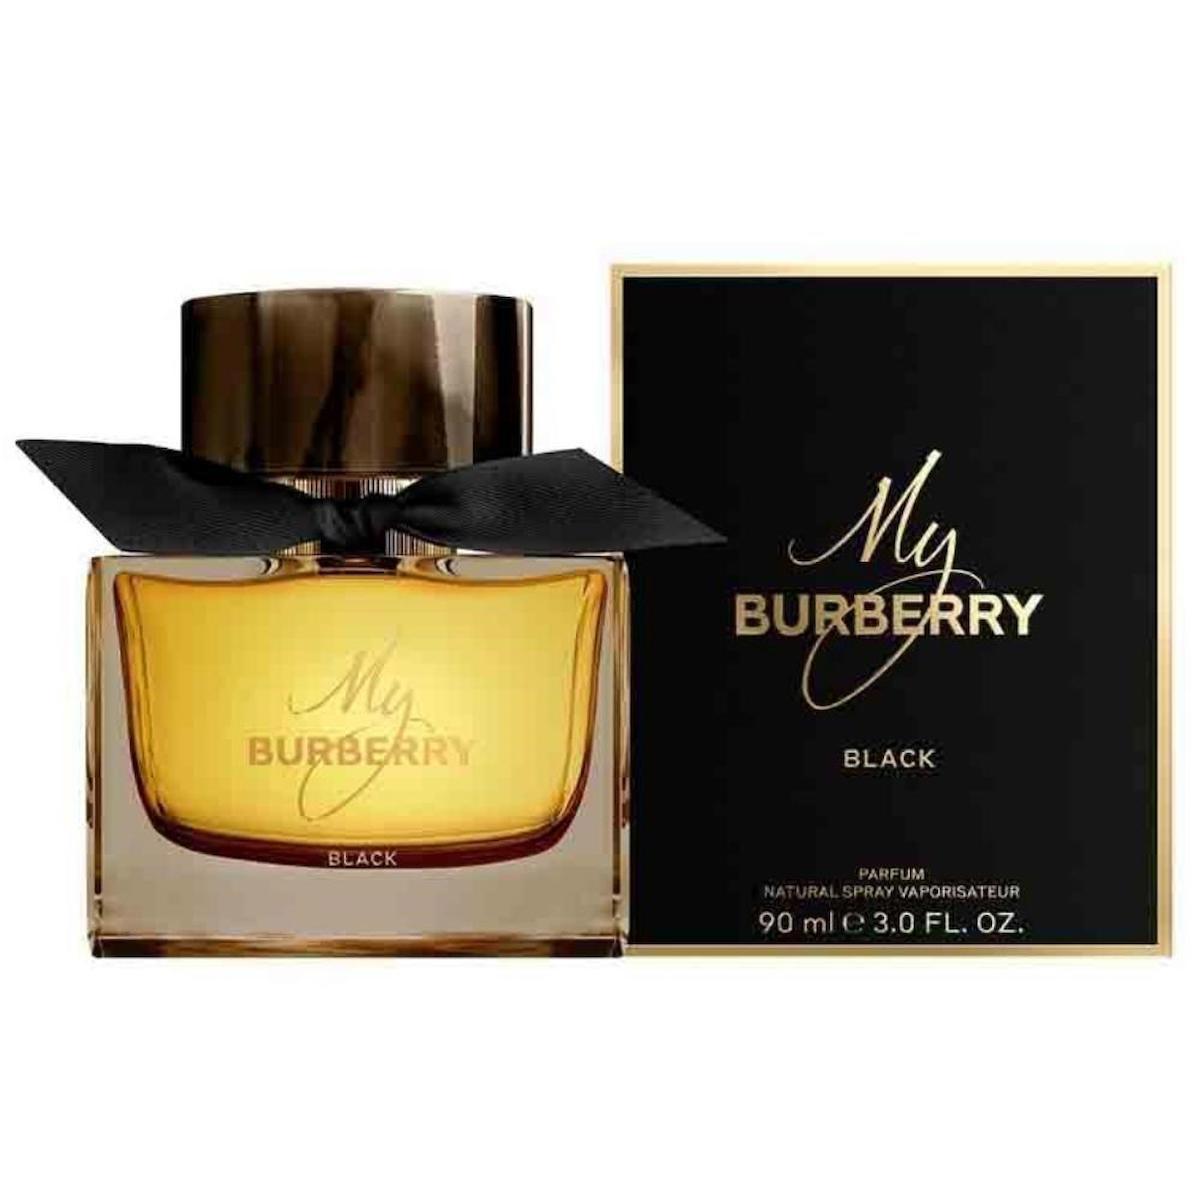 Burberry My Burberry Black EDP Oryantal Kadın Parfüm 90 ml